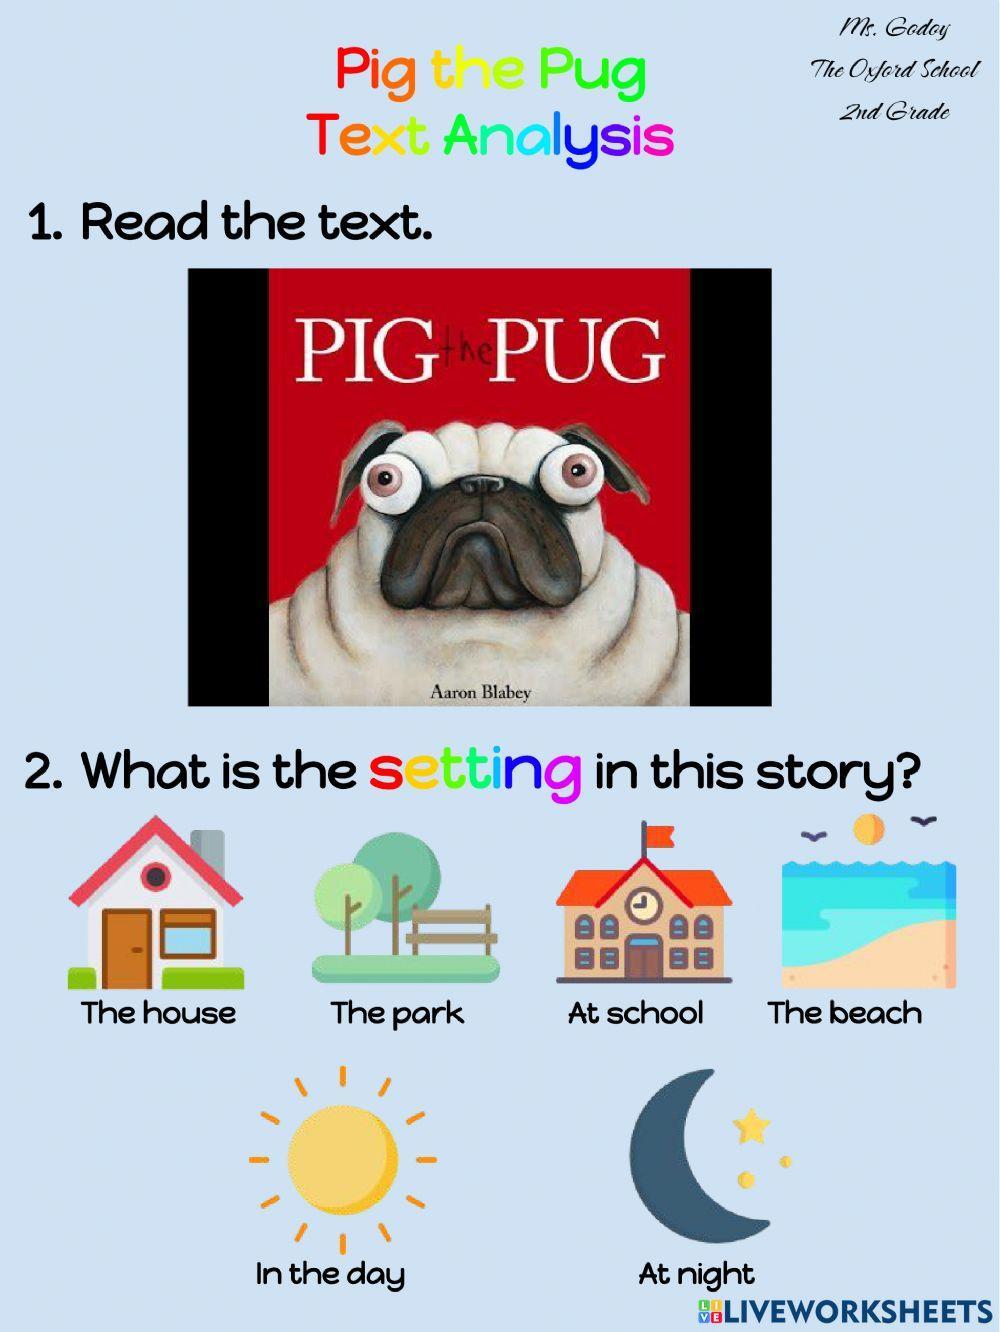 Pig the Pug - Text Analysis